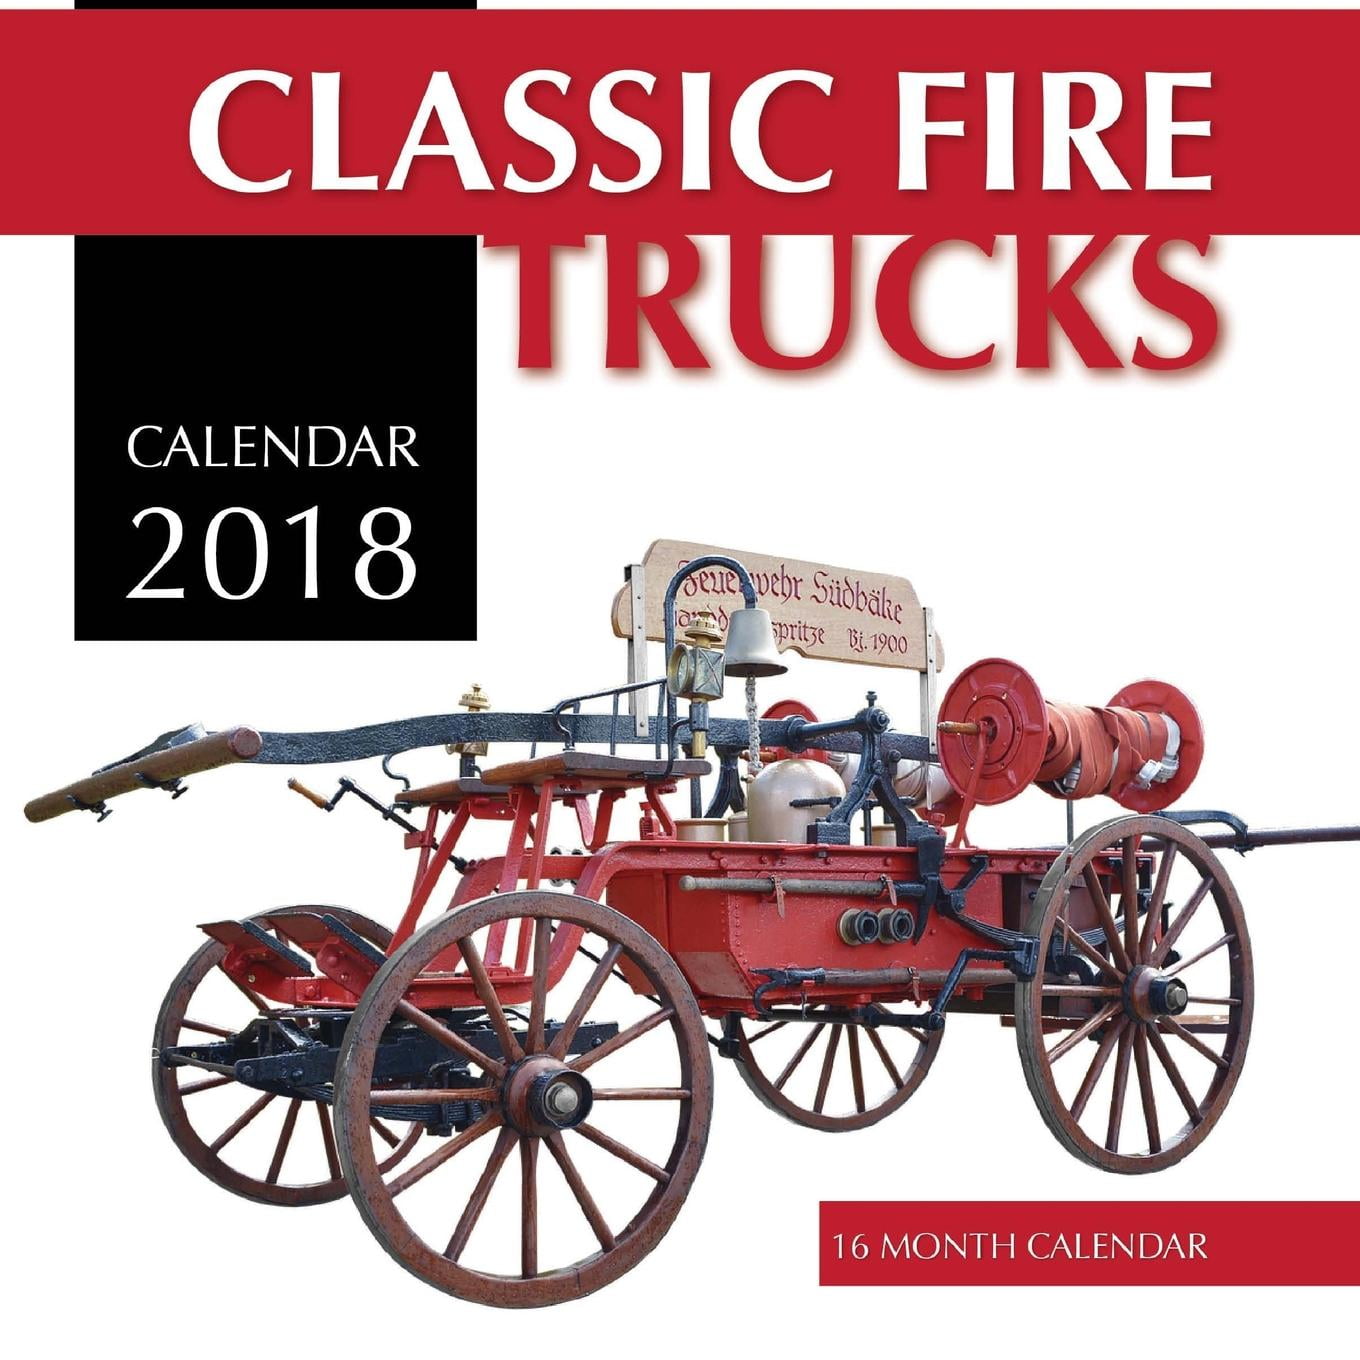 Classic Fire Trucks Calendar 2018 16 Month Calendar (Paperback